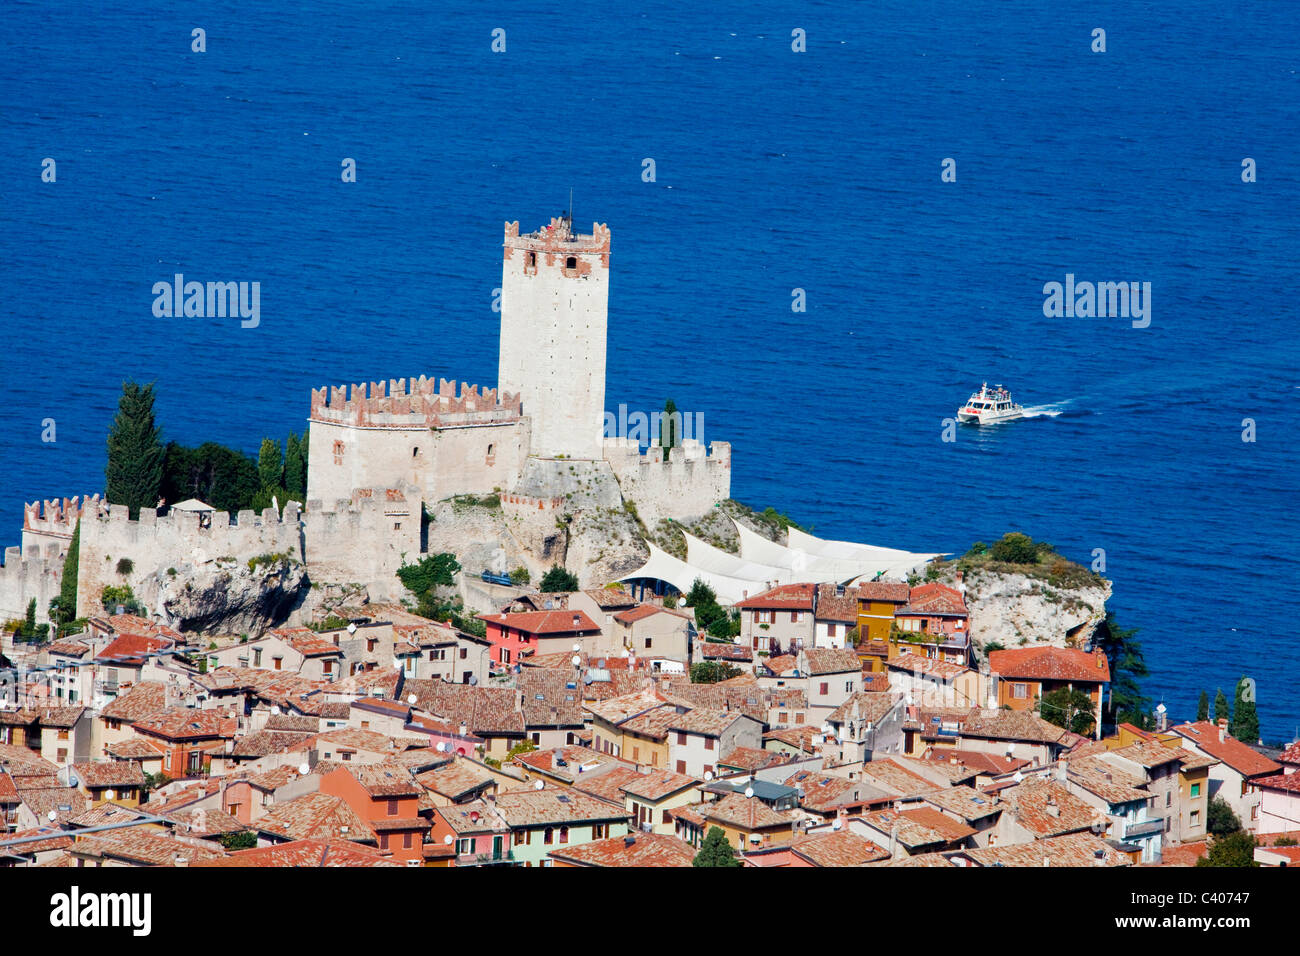 Italy, Europe, lake Garda, lake, Malcesine, tower, rook, castle, Old Town Stock Photo